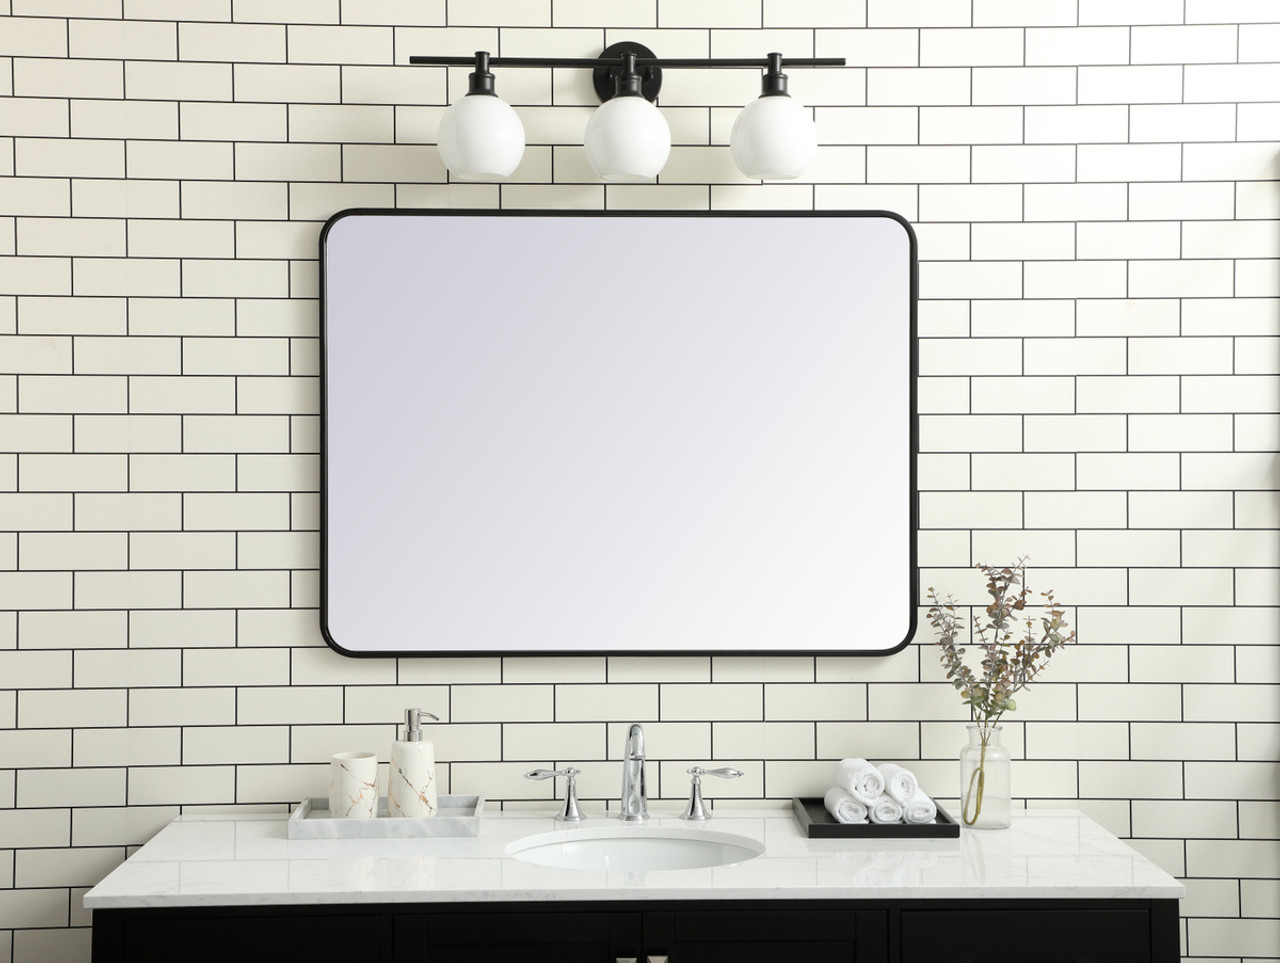 Elegant Decor MR803040BK Soft corner metal rectangular mirror 30x40 inch in Black